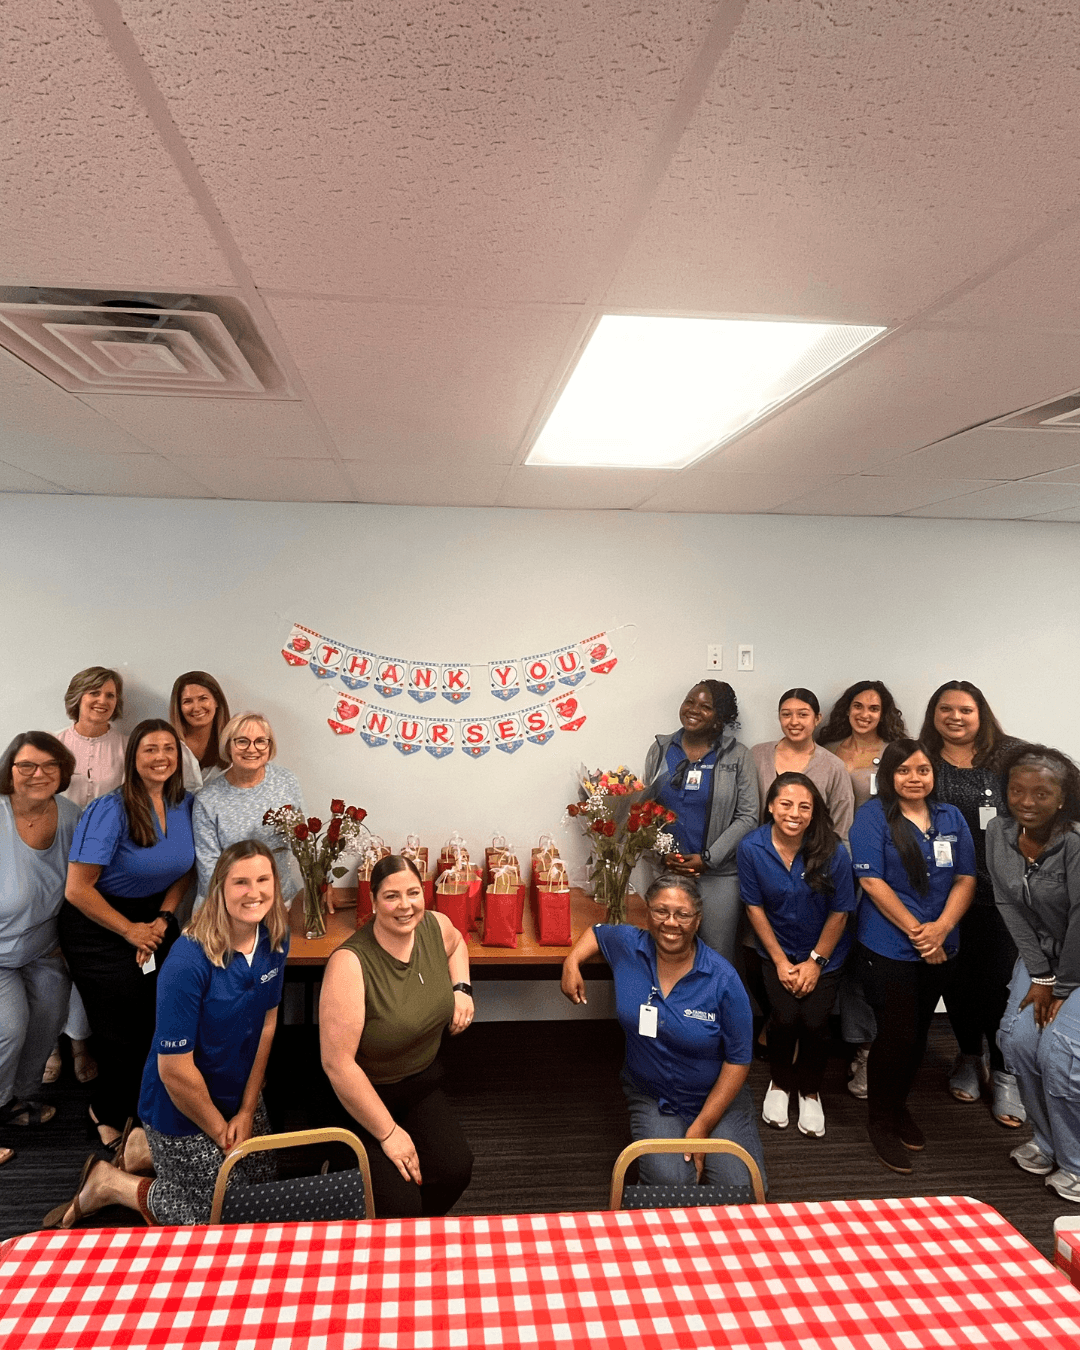 CJFHC Celebrates Our Home-Visiting Nurses